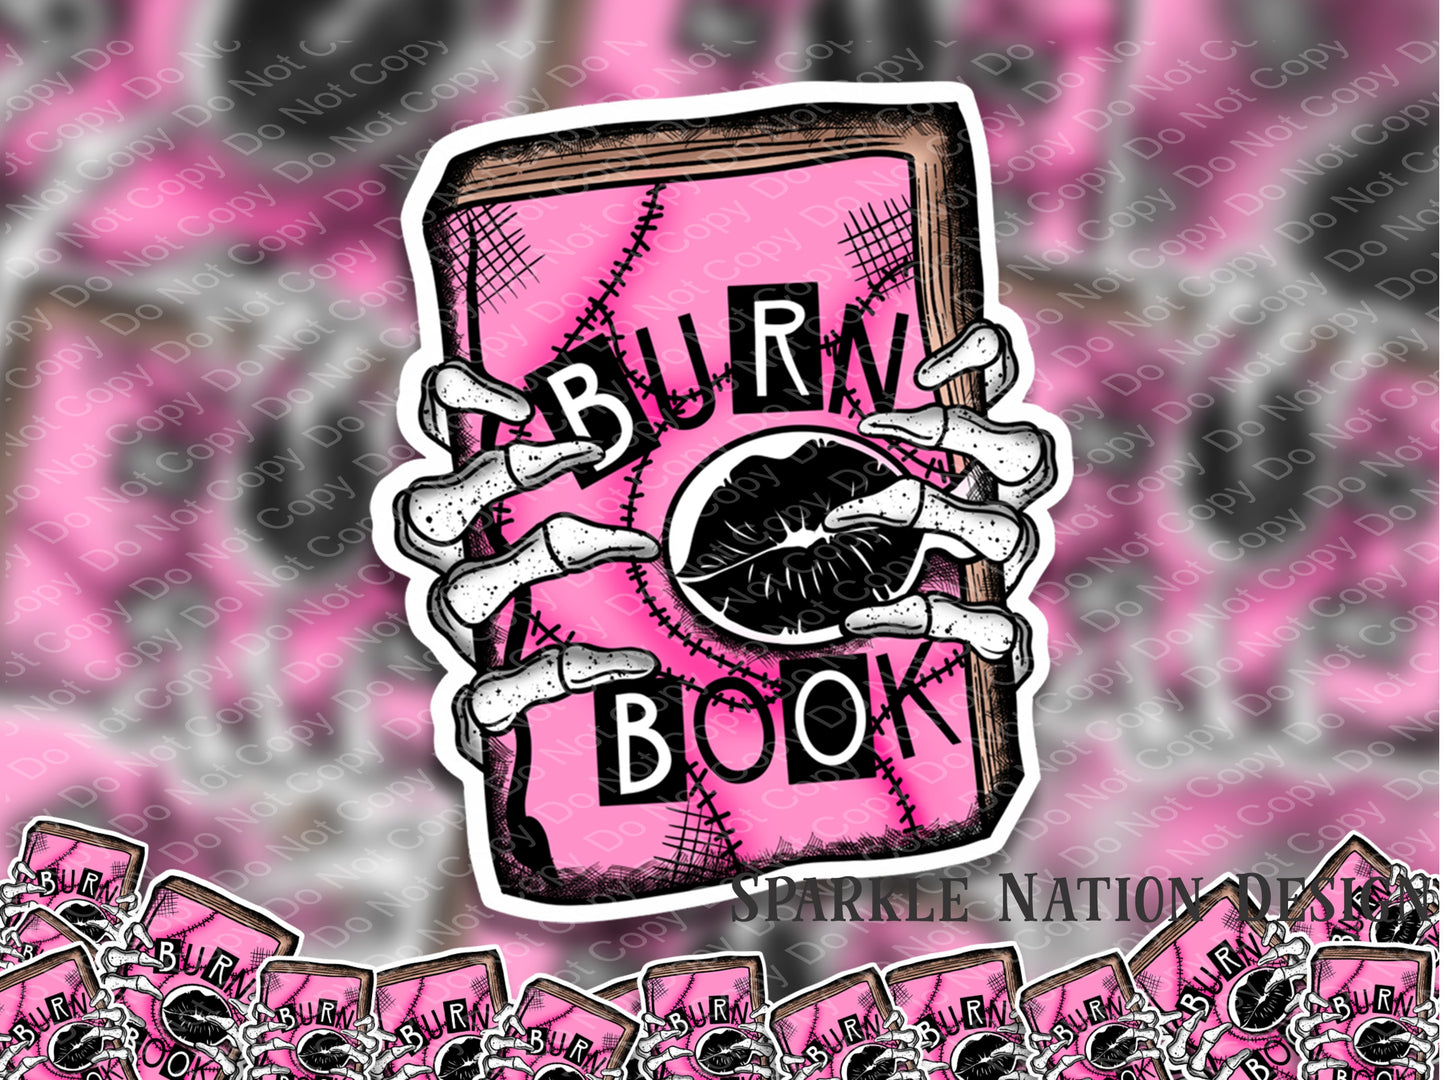 Skeleton Hands Burn Book Sticker